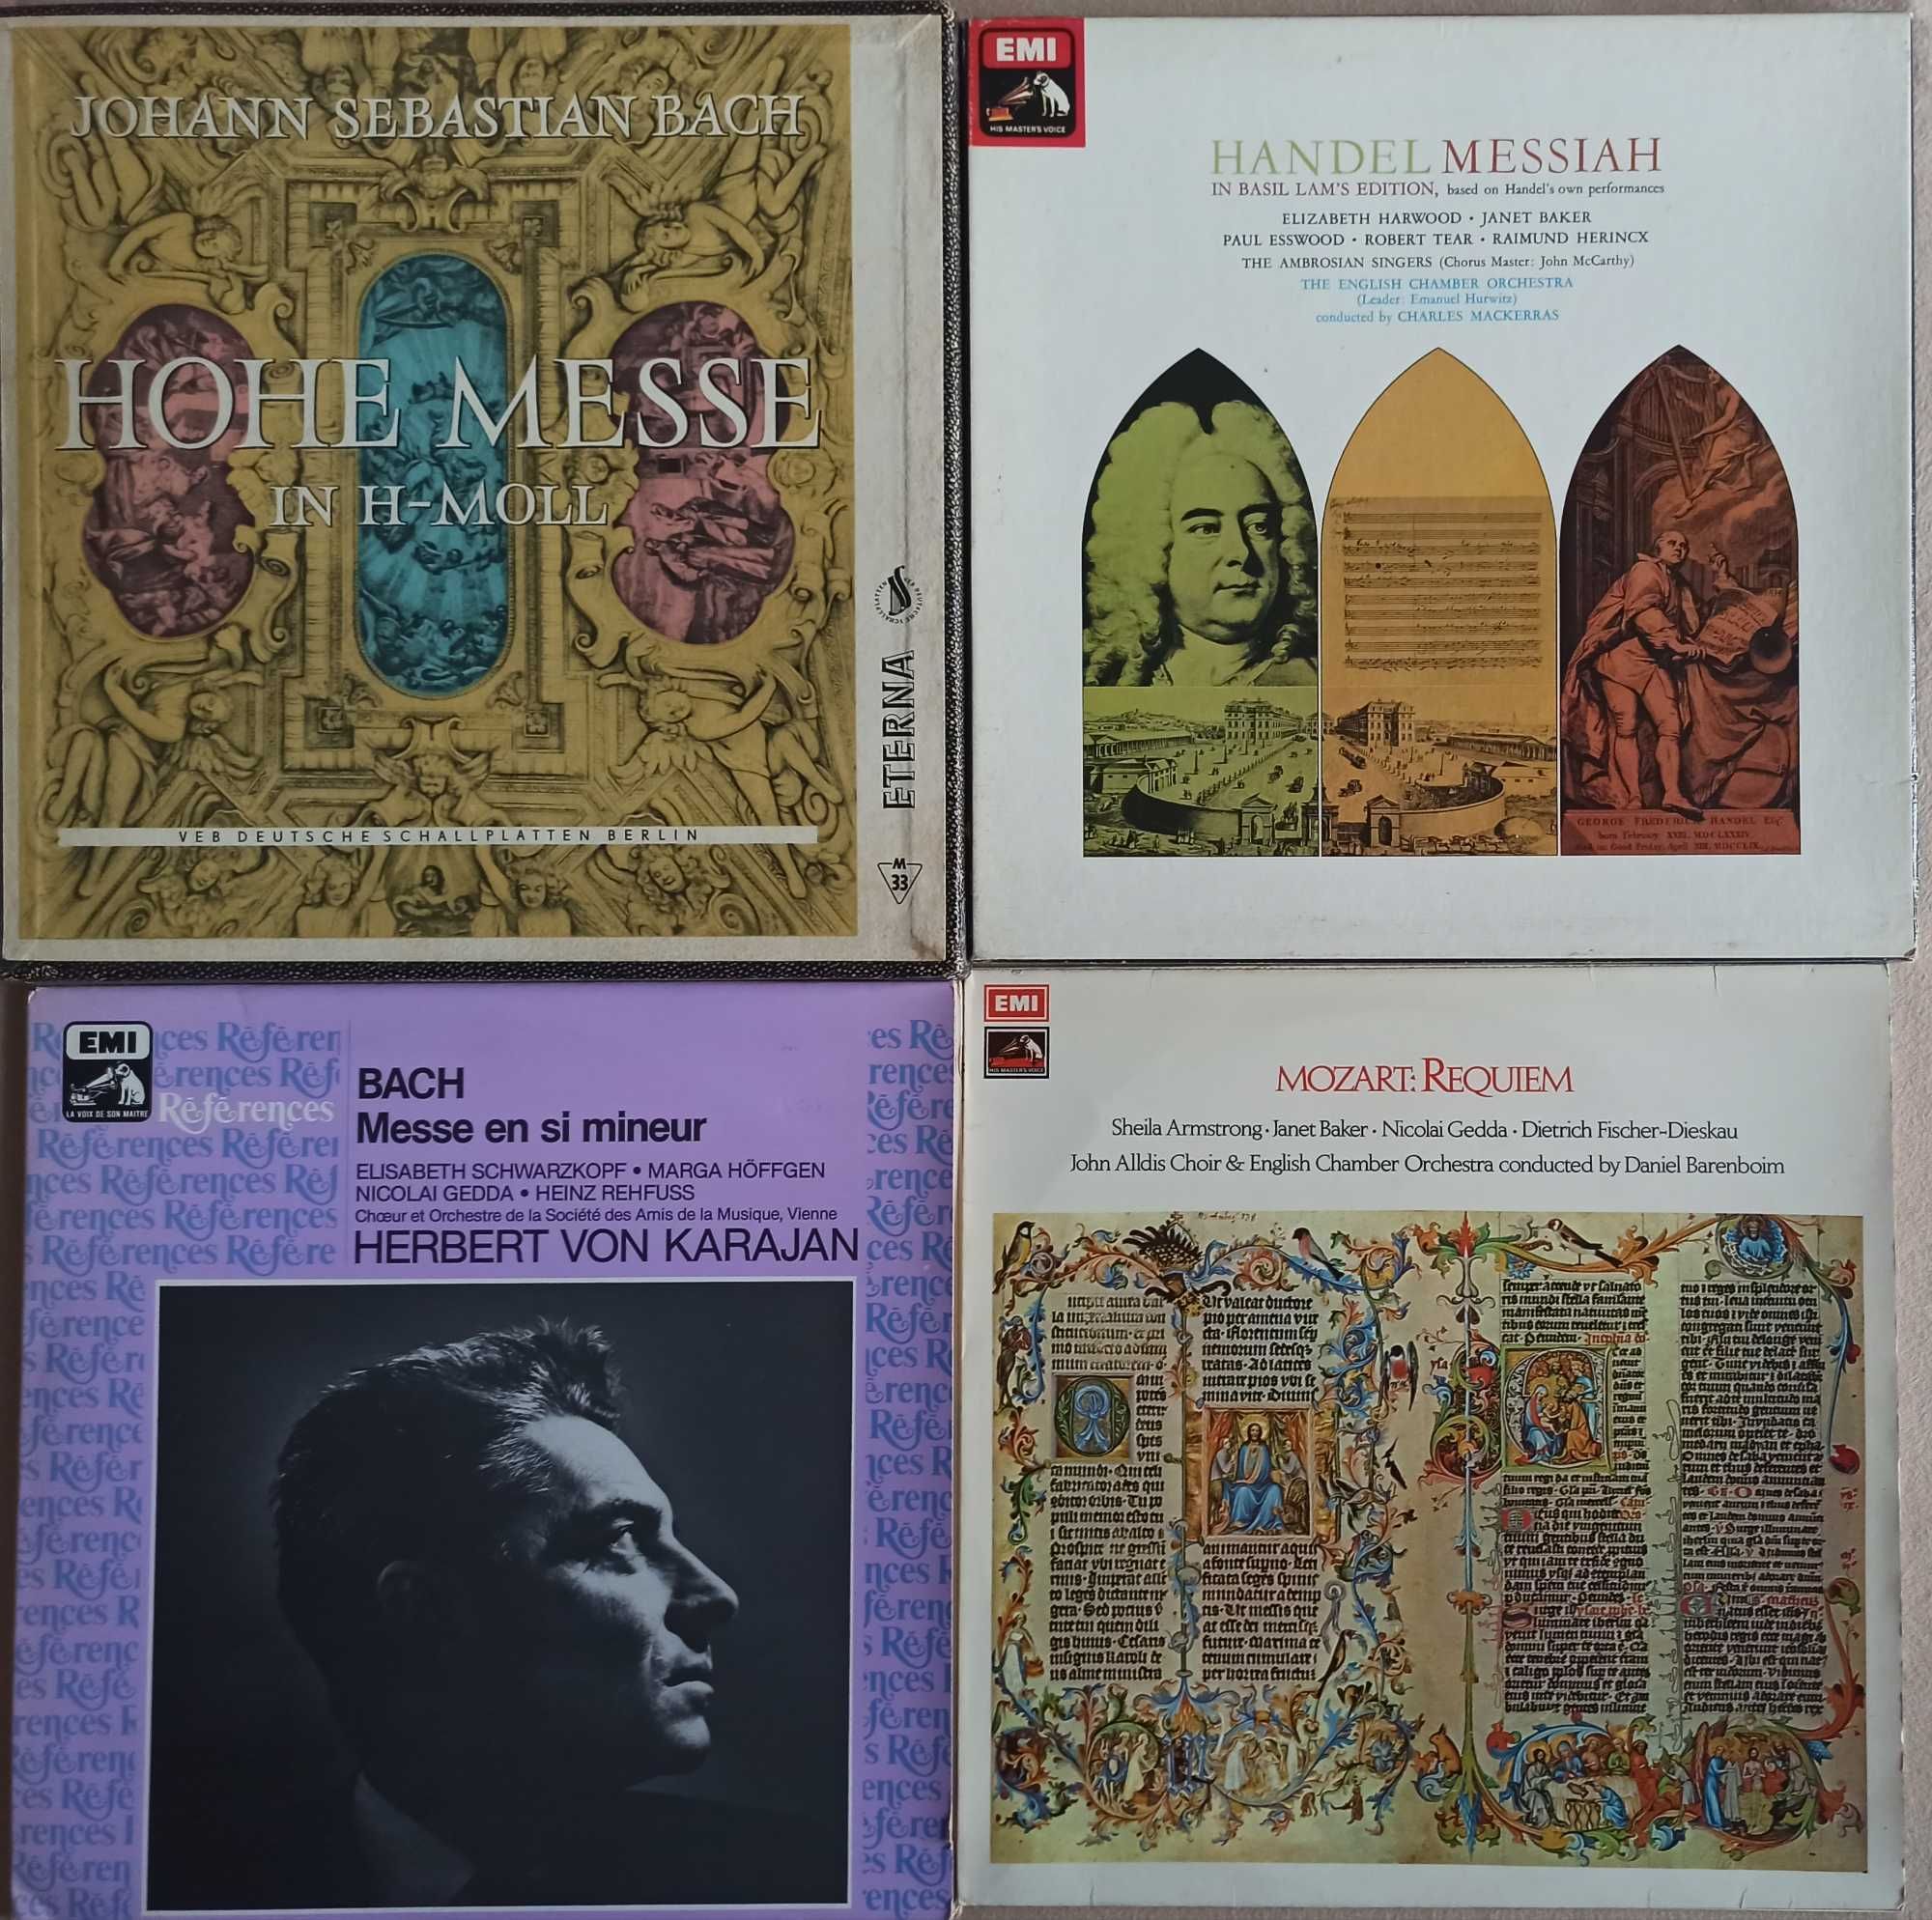 BEETHOVEN Missa solemnis, MOZART Requiem, HENDEL Messiah, BACH Messe